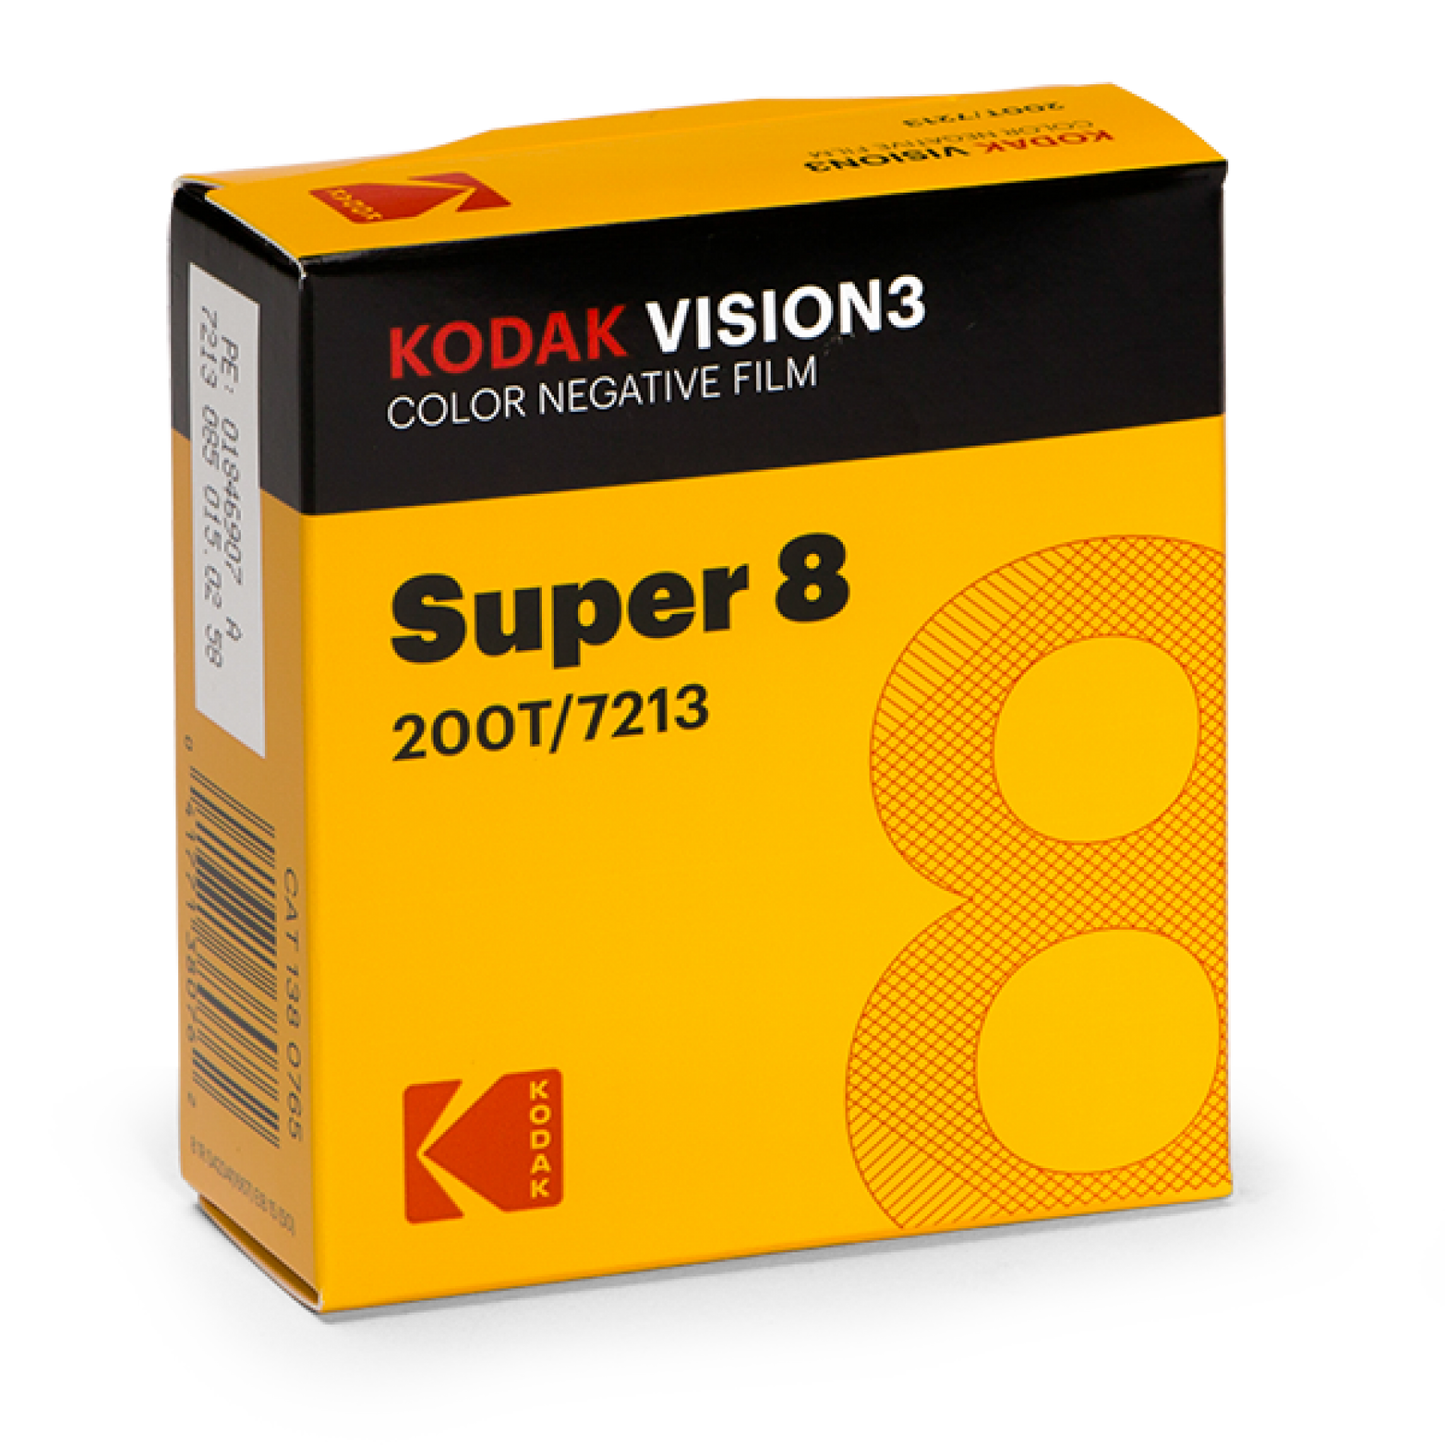 Kodak Vision3 super 8 film - 200T/7213